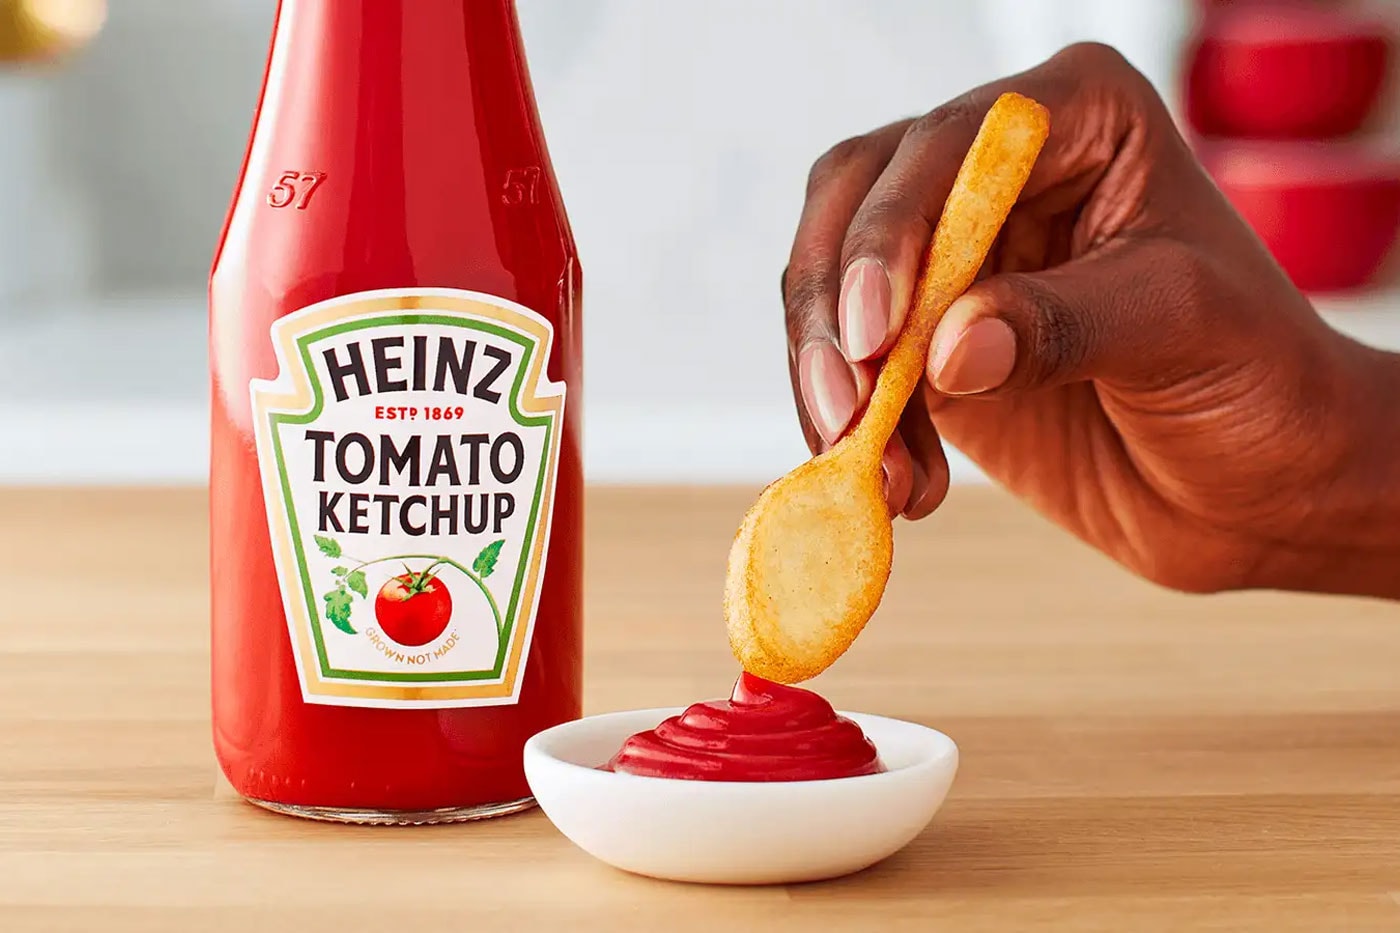 Heinz Ketchup Spoon Friez scoop up sauce United Kingdom UK raffle national fry day release info date